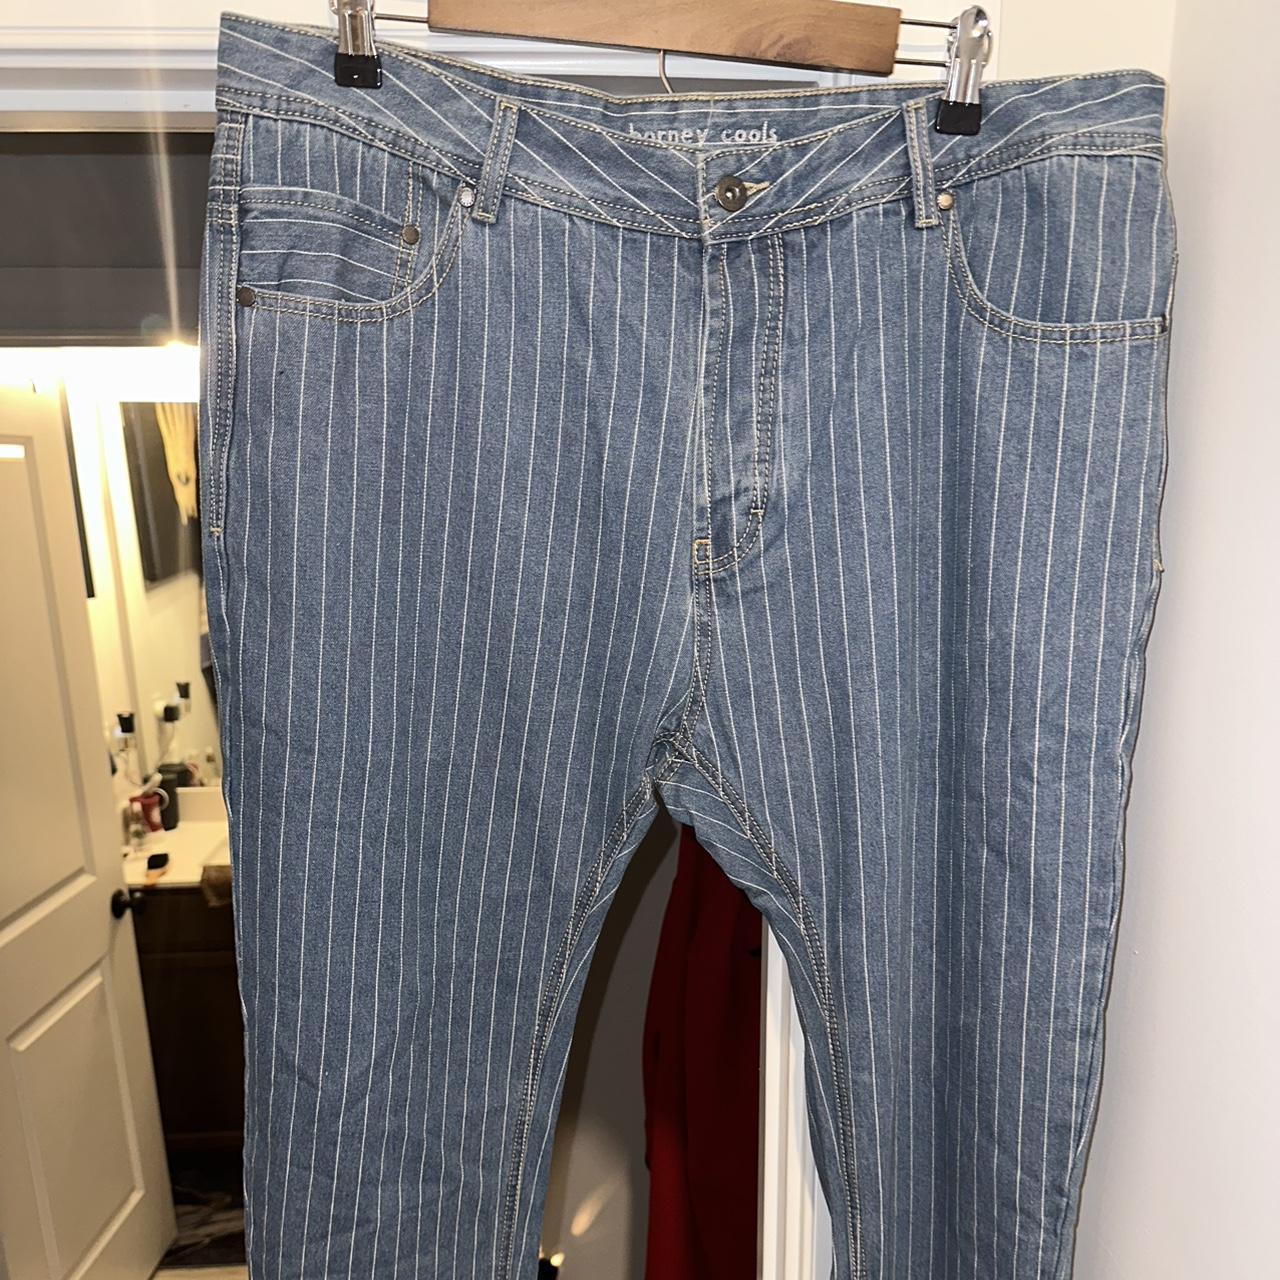 Barney Cools Men's Jeans